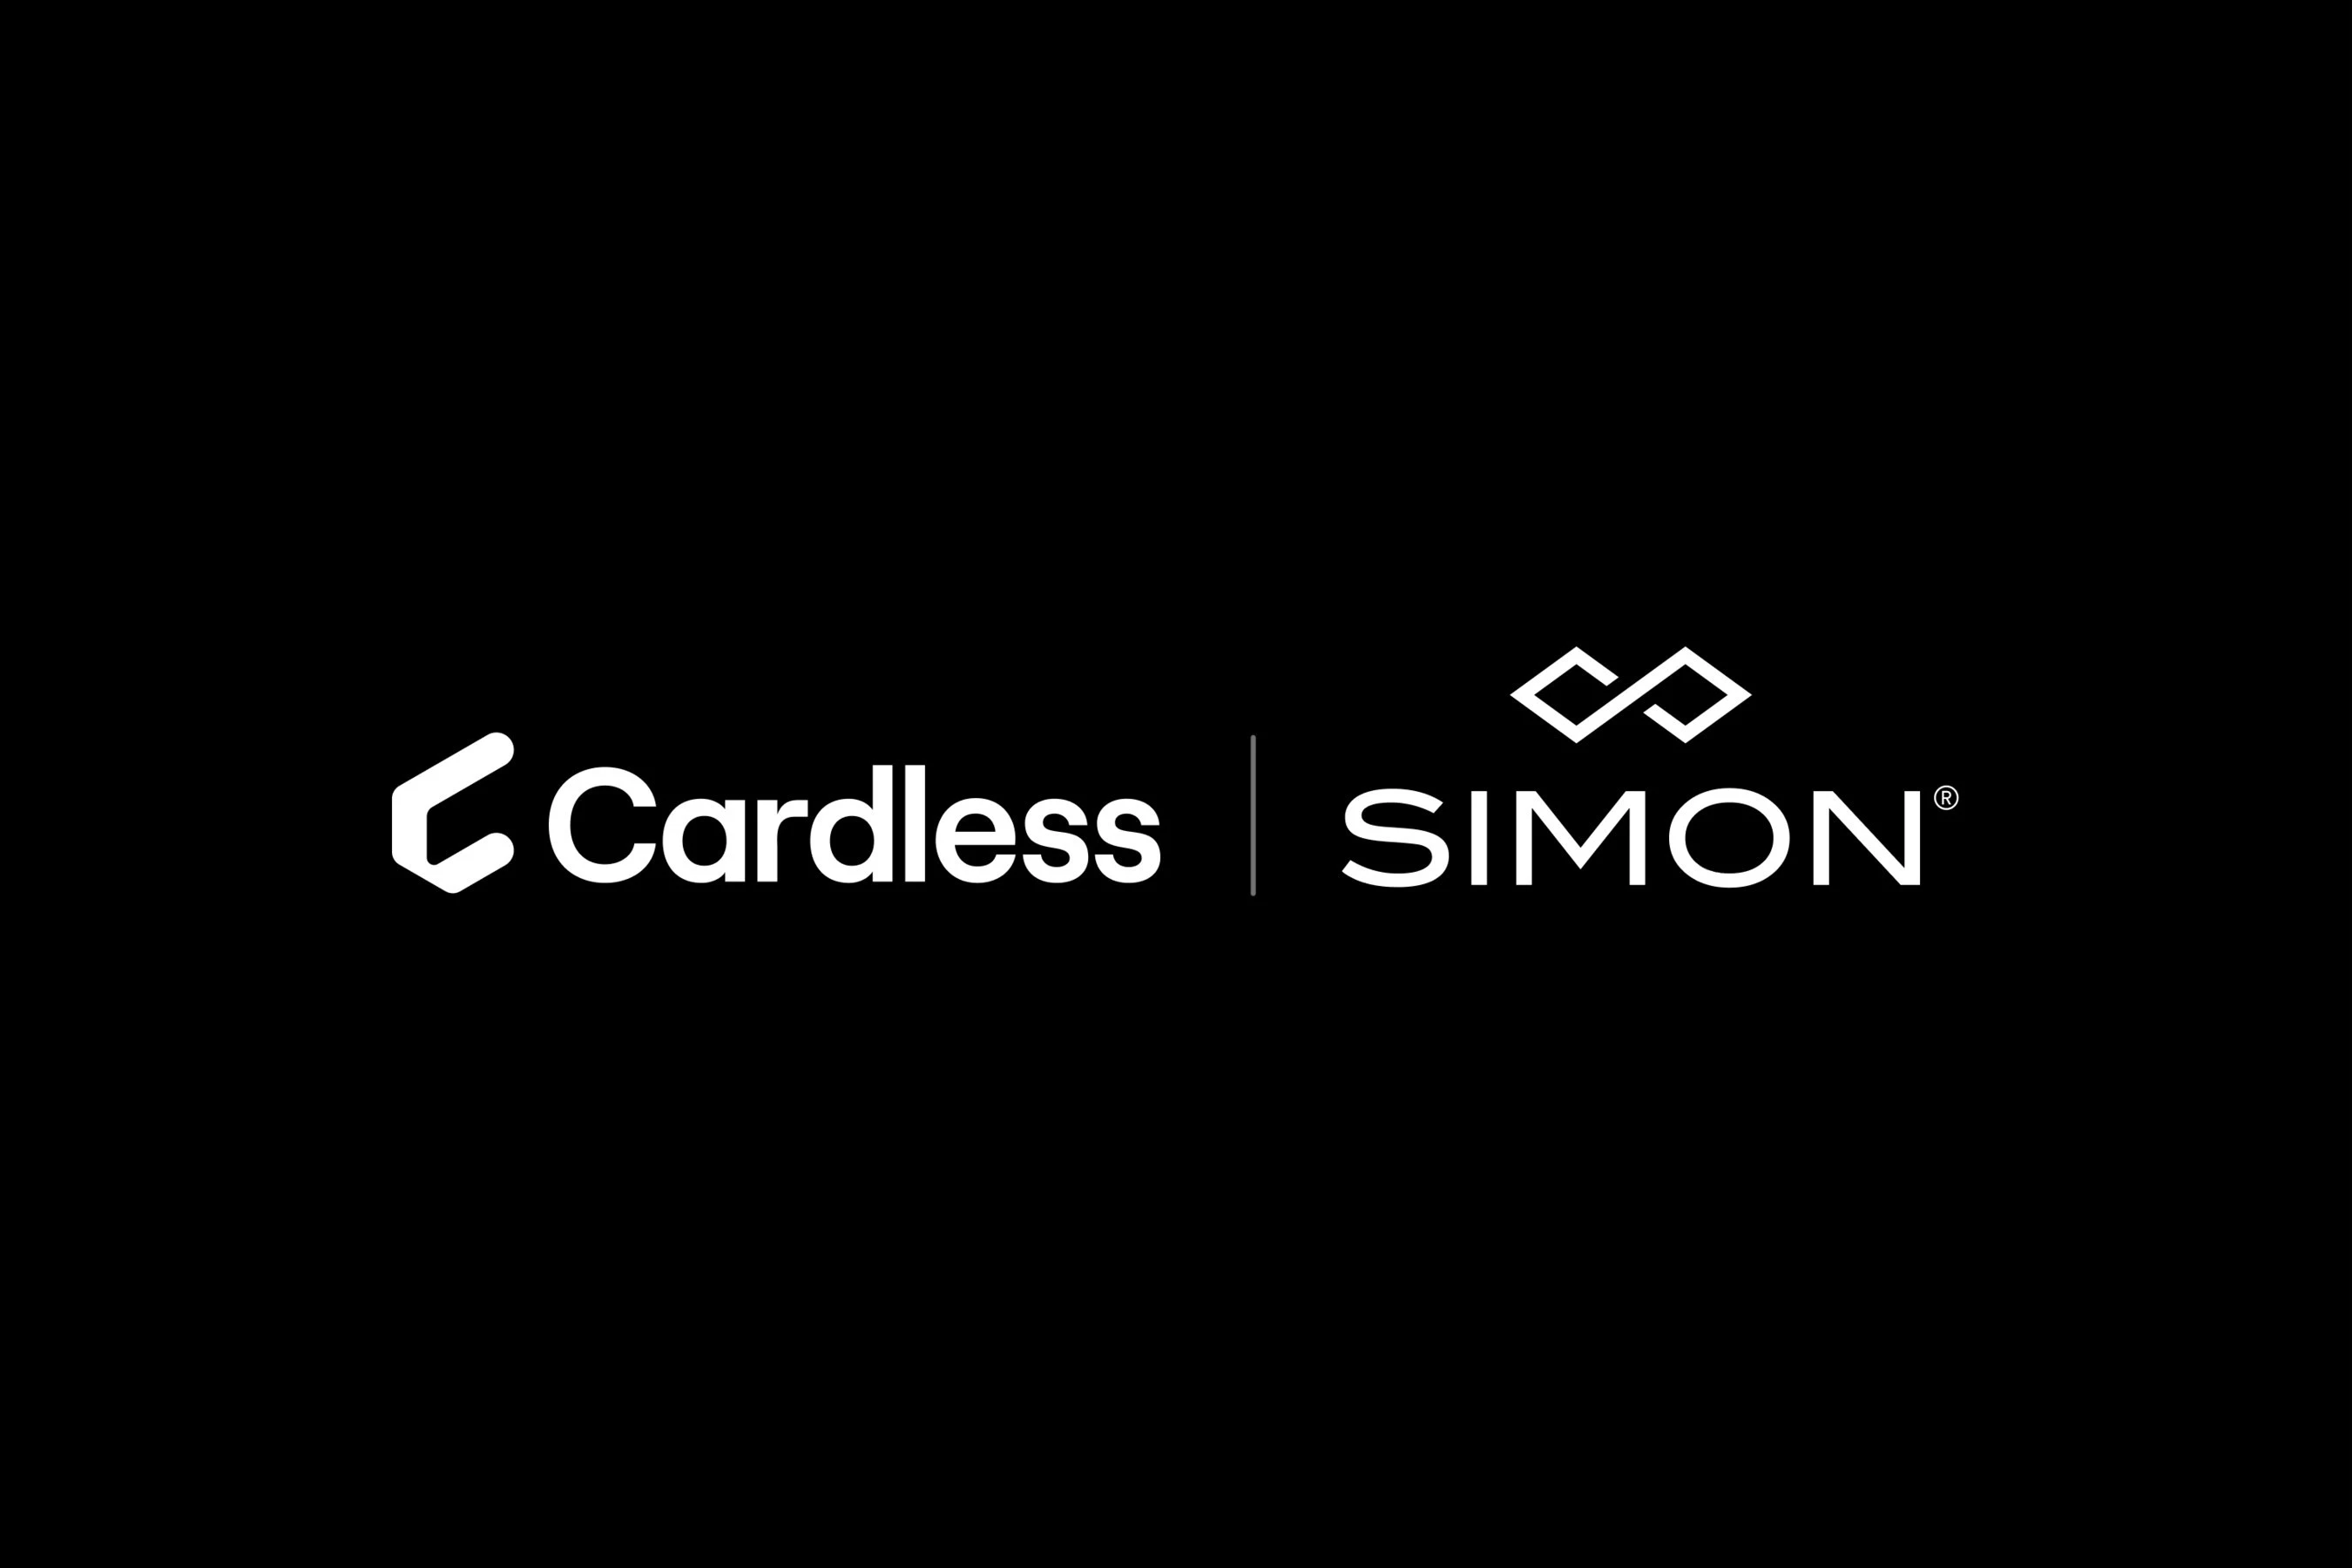 Cardless and Simon logos